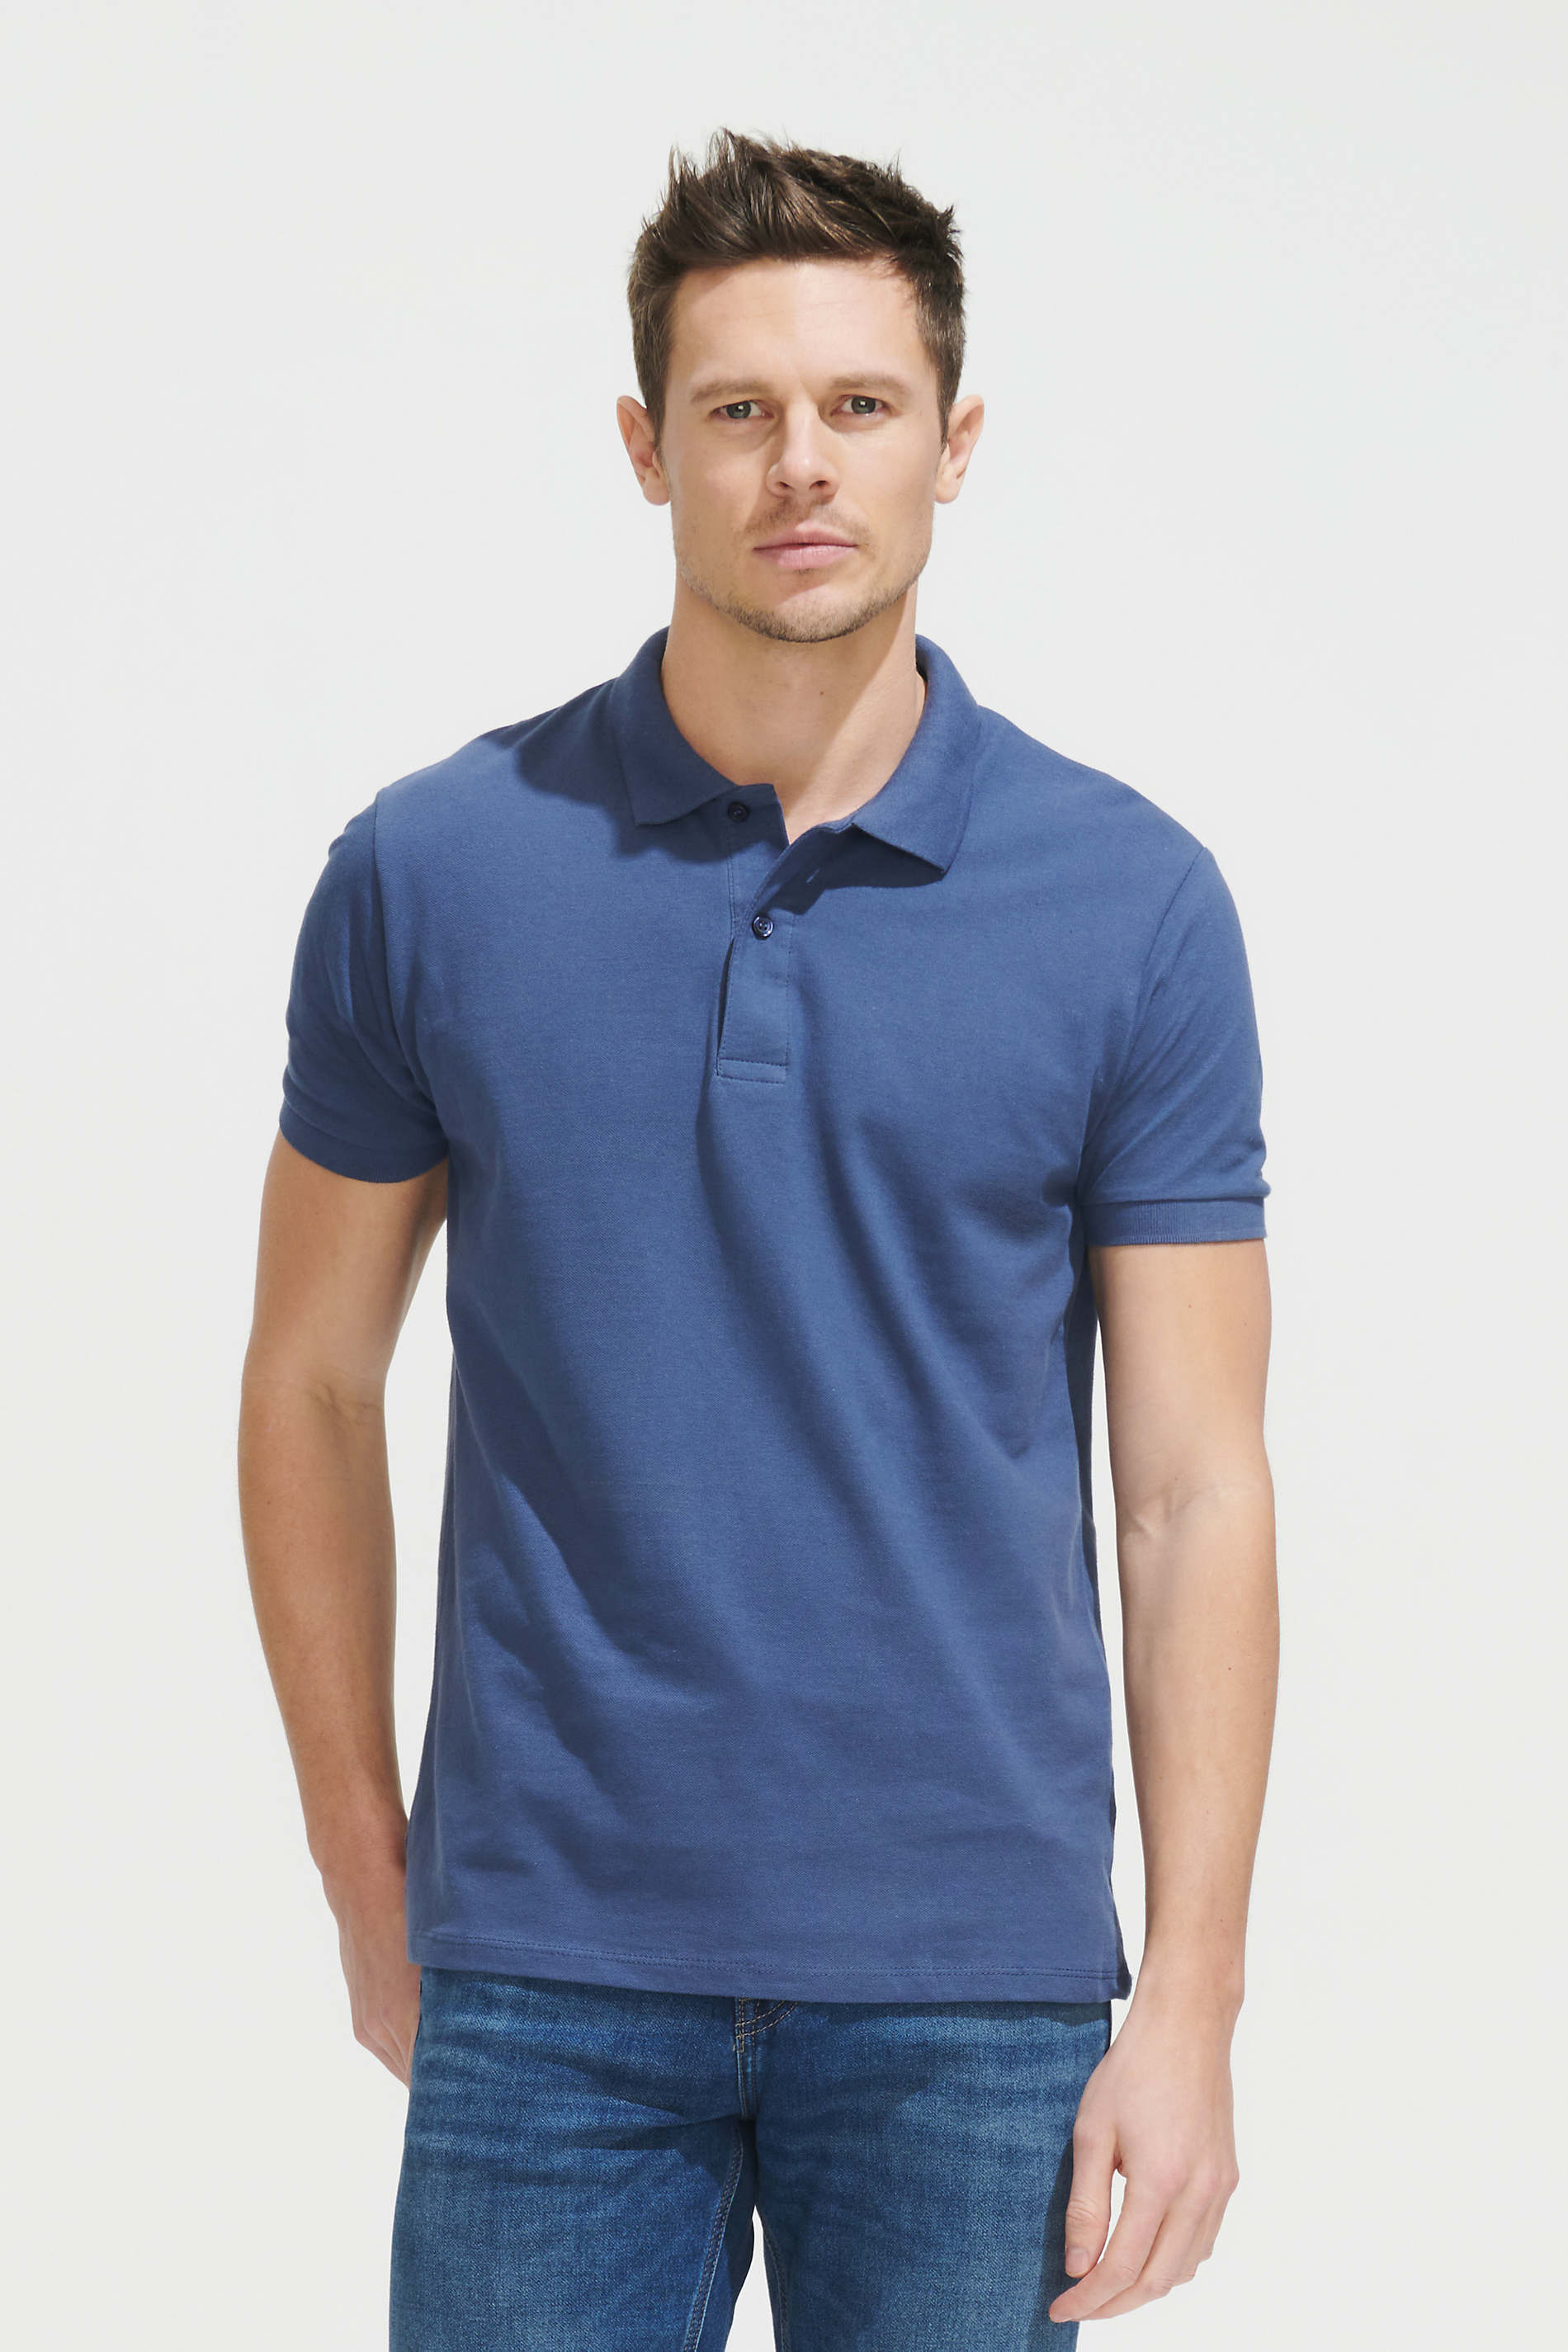 Mens Boys Plain Pique Polo Shirt Short Sleeves Top Men's Casual Regular T-Shirt